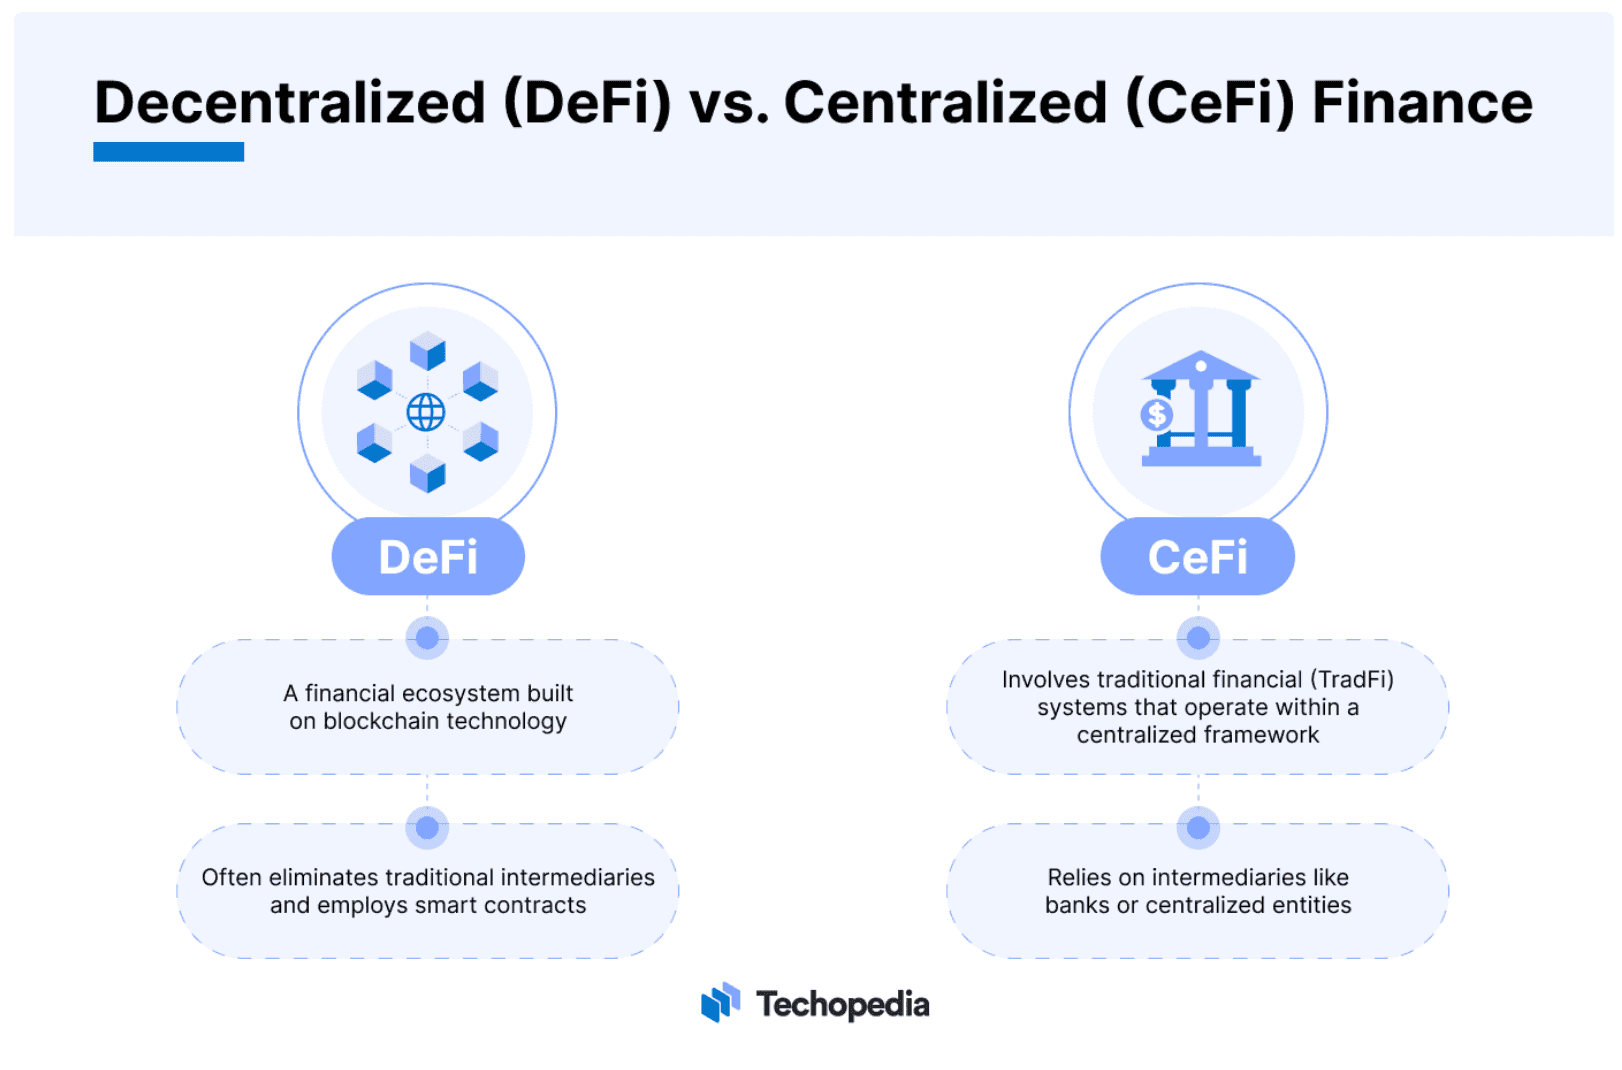 Top_Defi_Projects_DeFi_vs_CeF